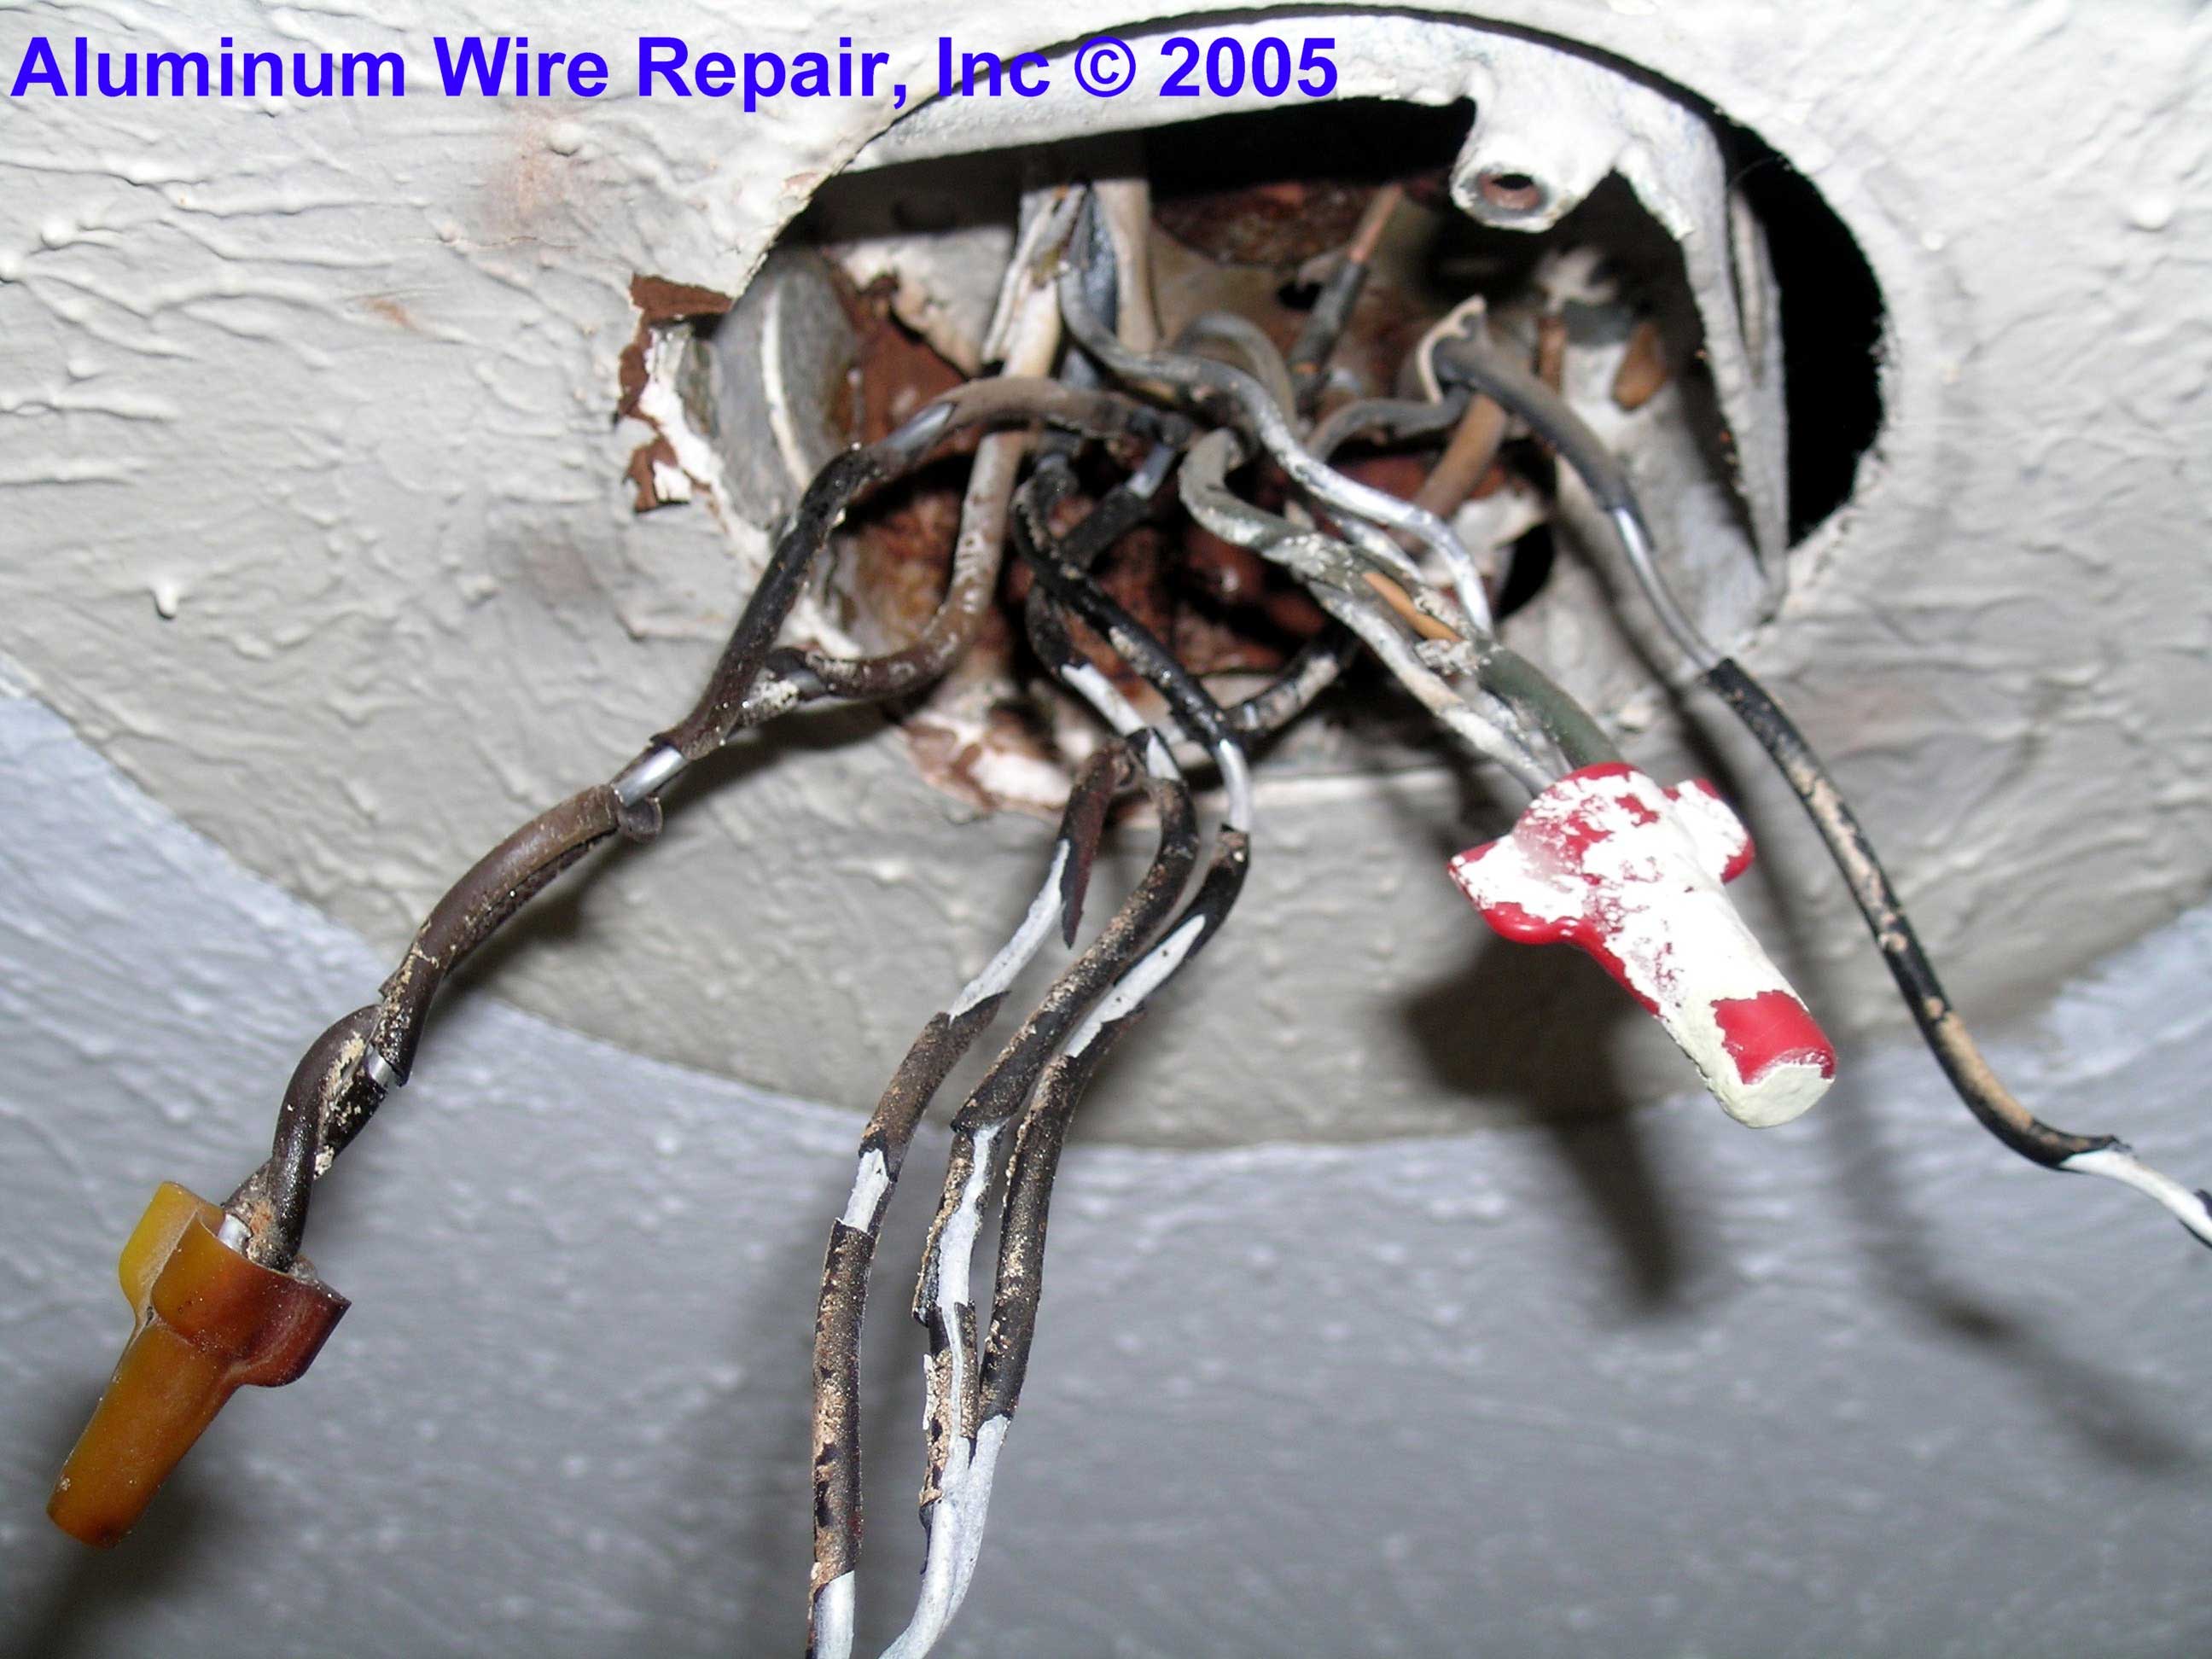 Aluminum electrical wiring showing burning